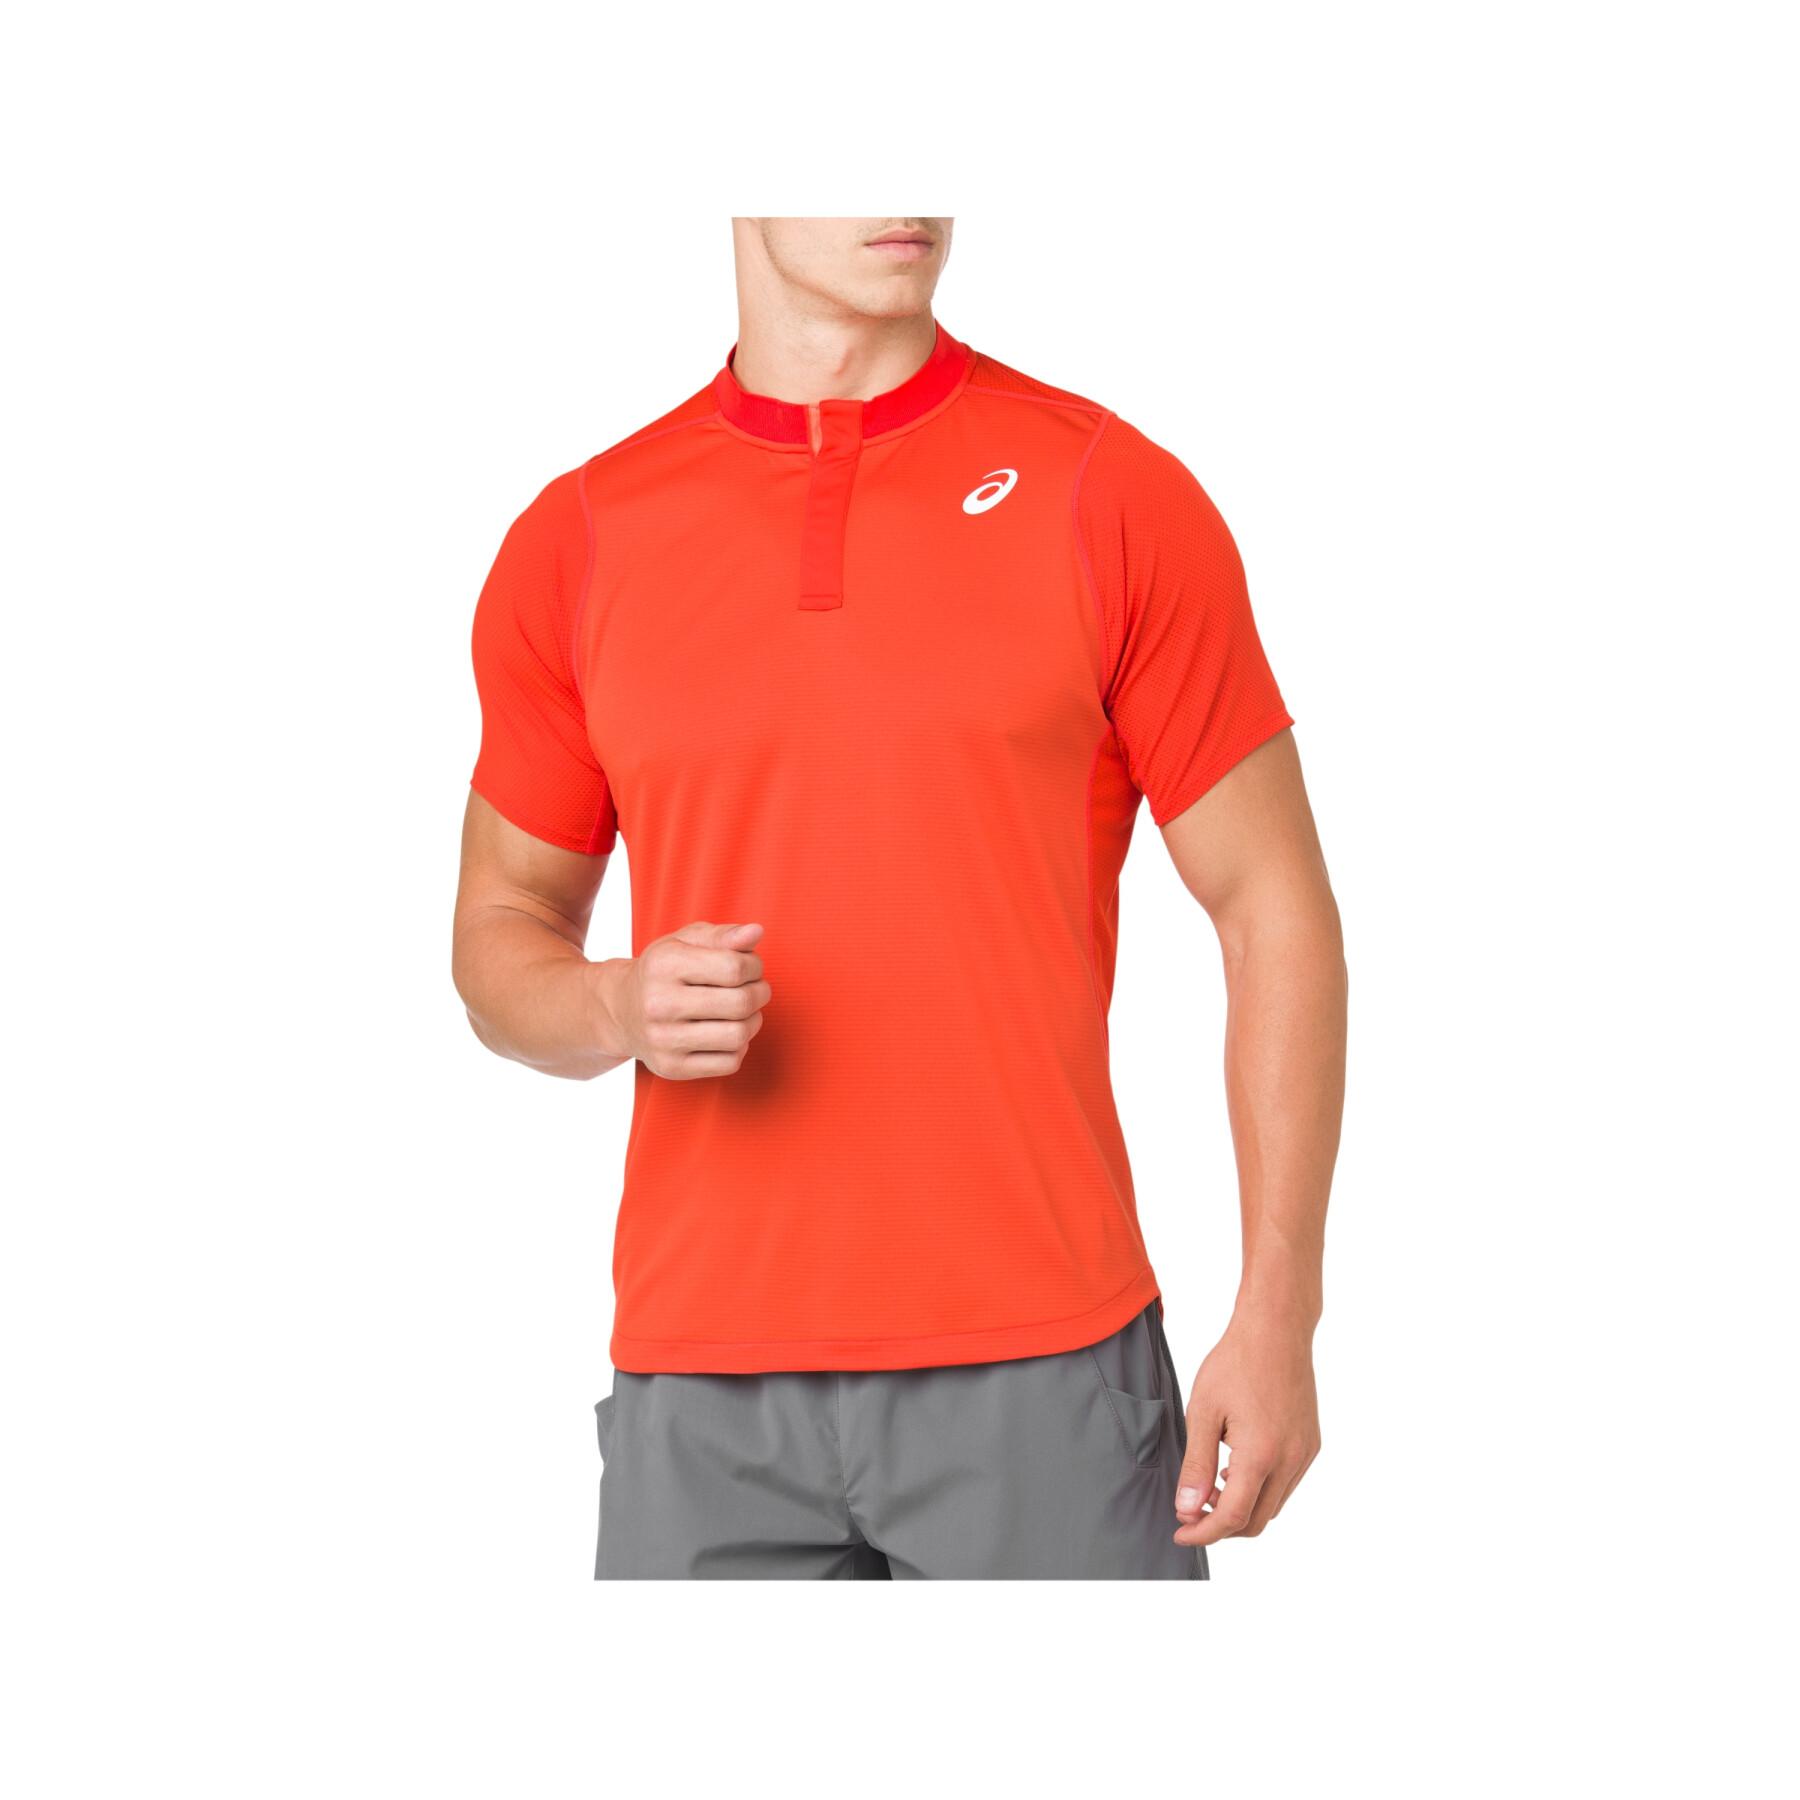 Asics Gel Cool Polo Shirt